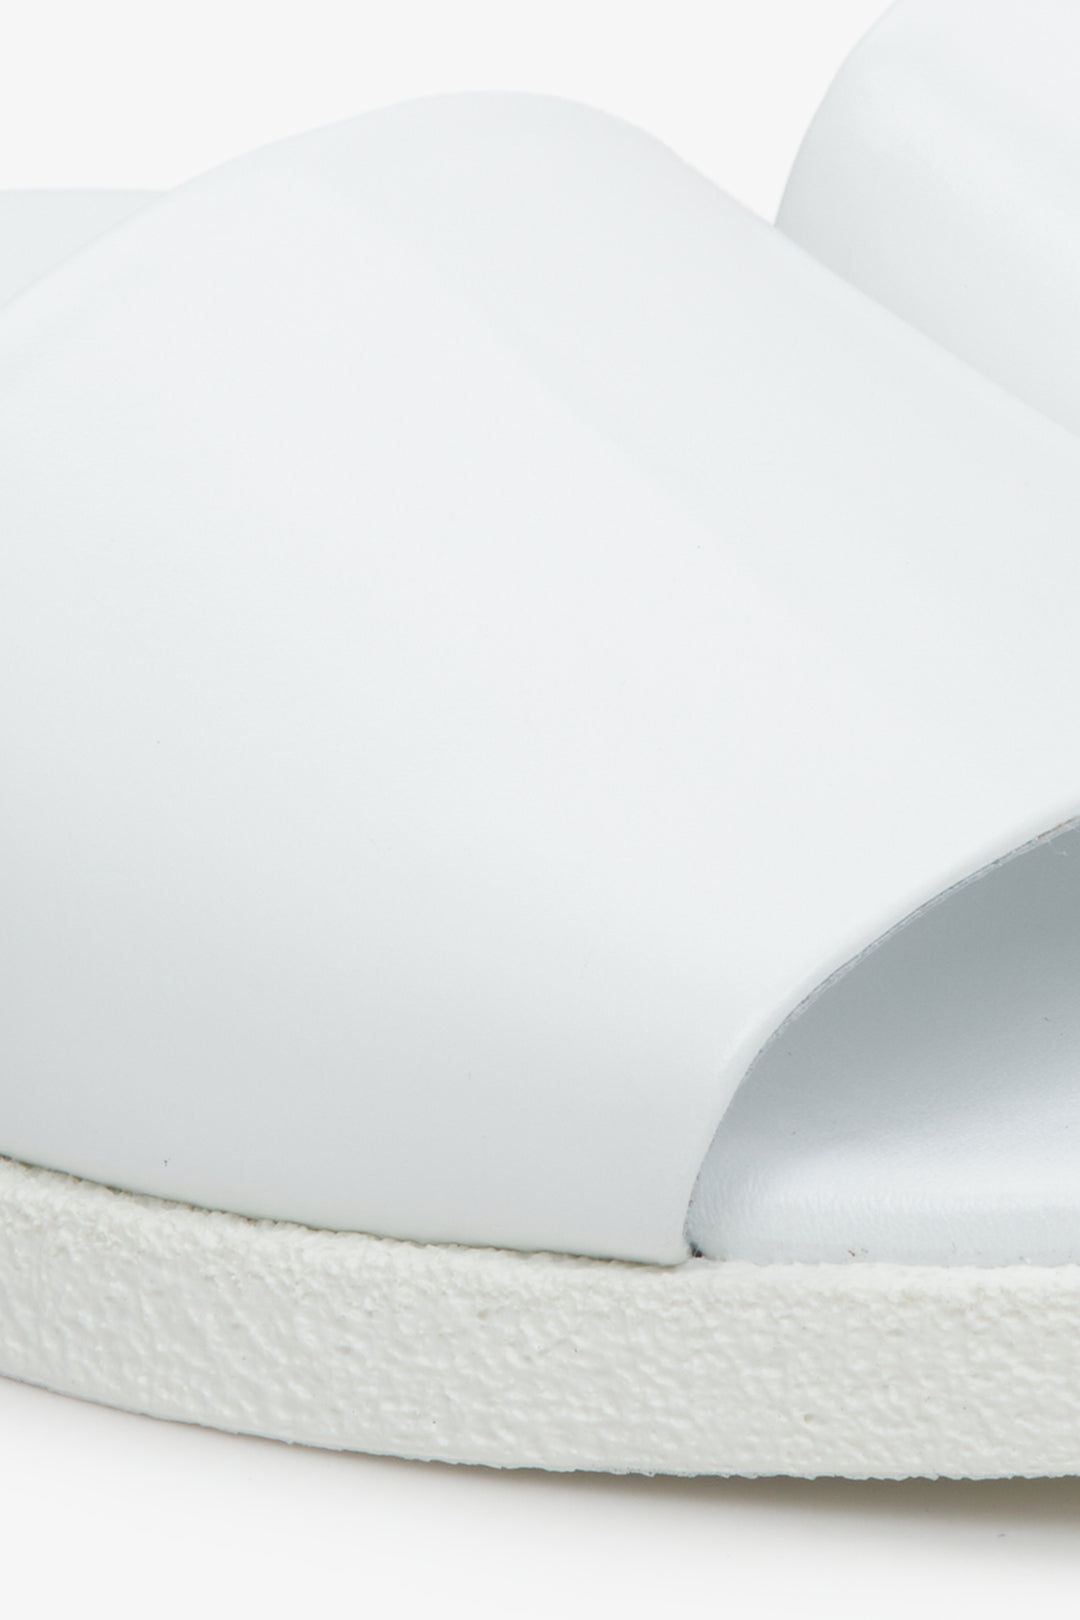 Women's white Estro flat slides - close-up on details.